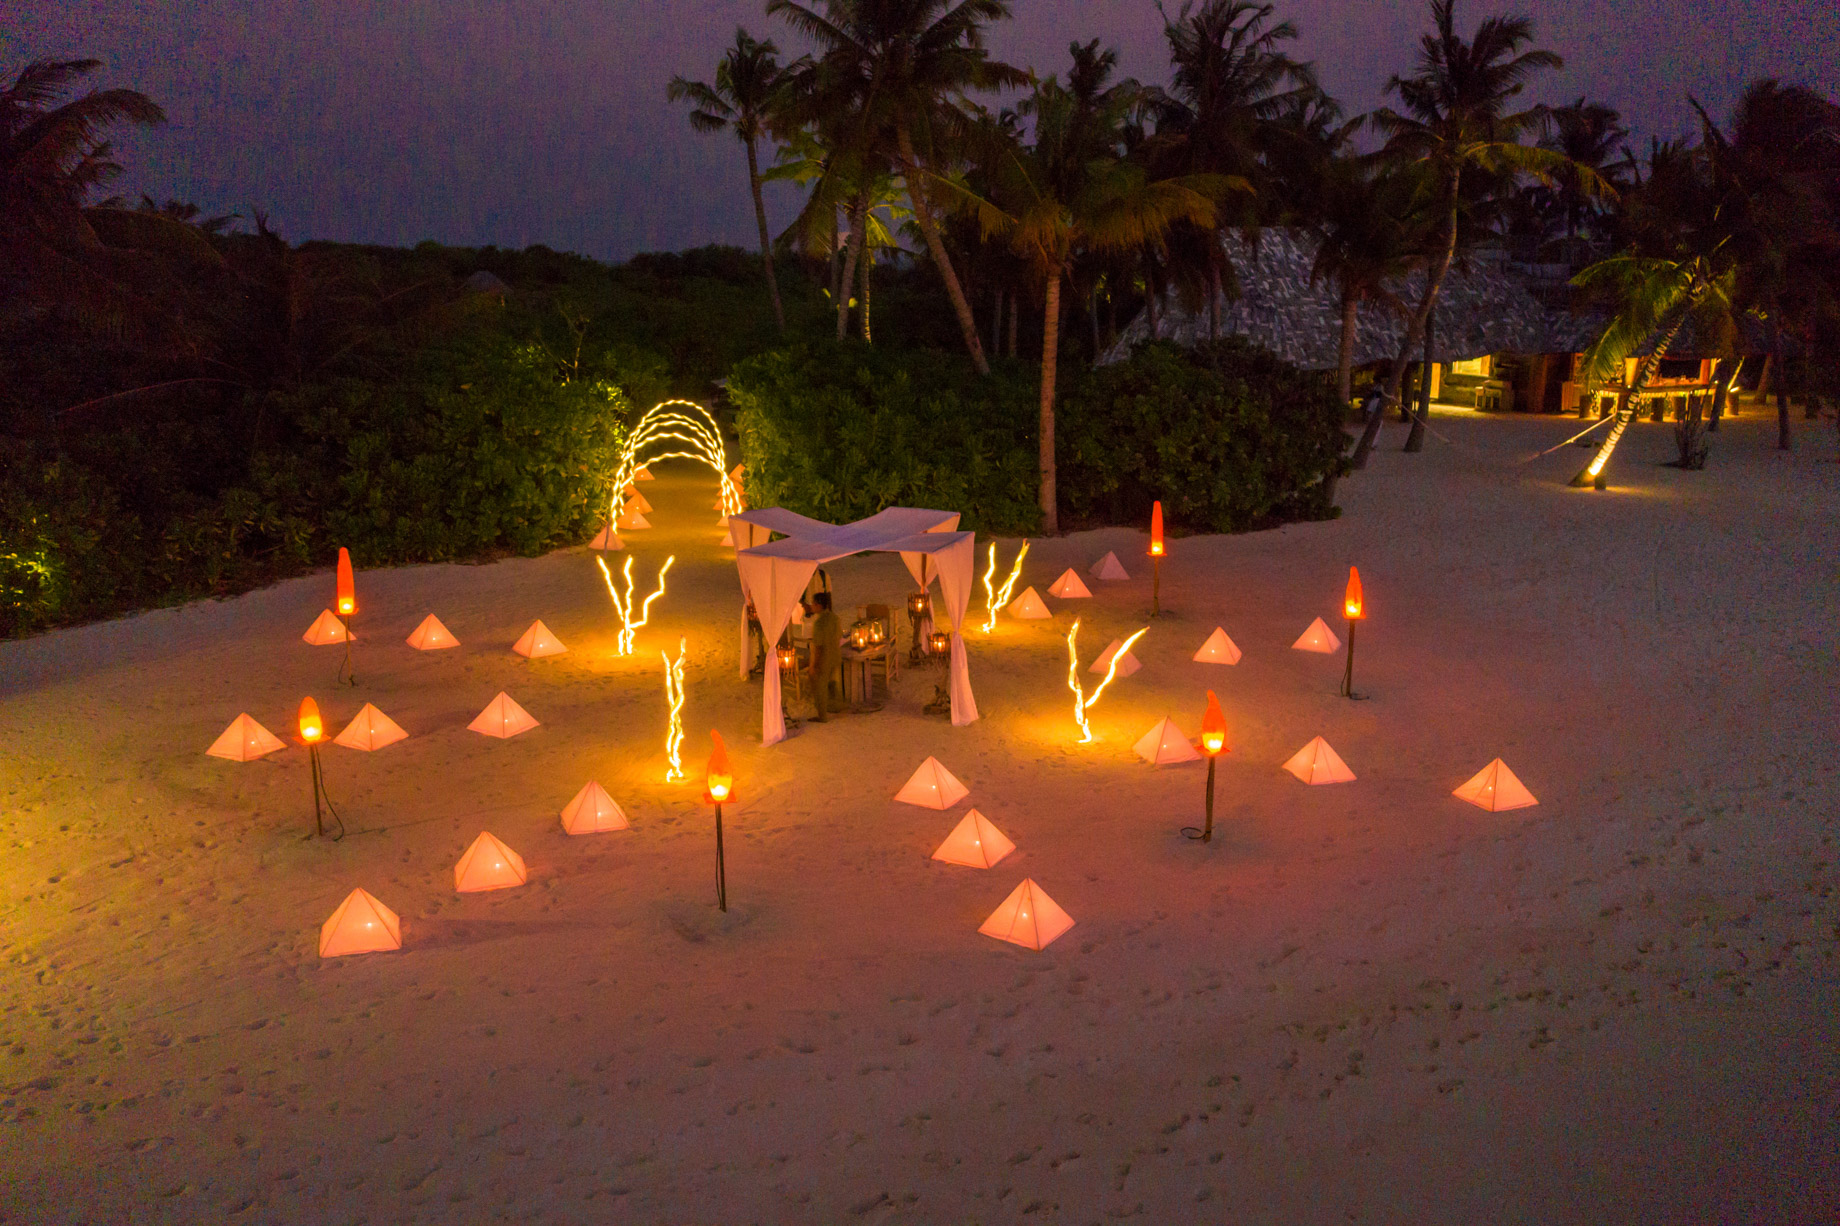 Soneva Jani Resort – Noonu Atoll, Medhufaru, Maldives – Private Island Beach Dining Sunset